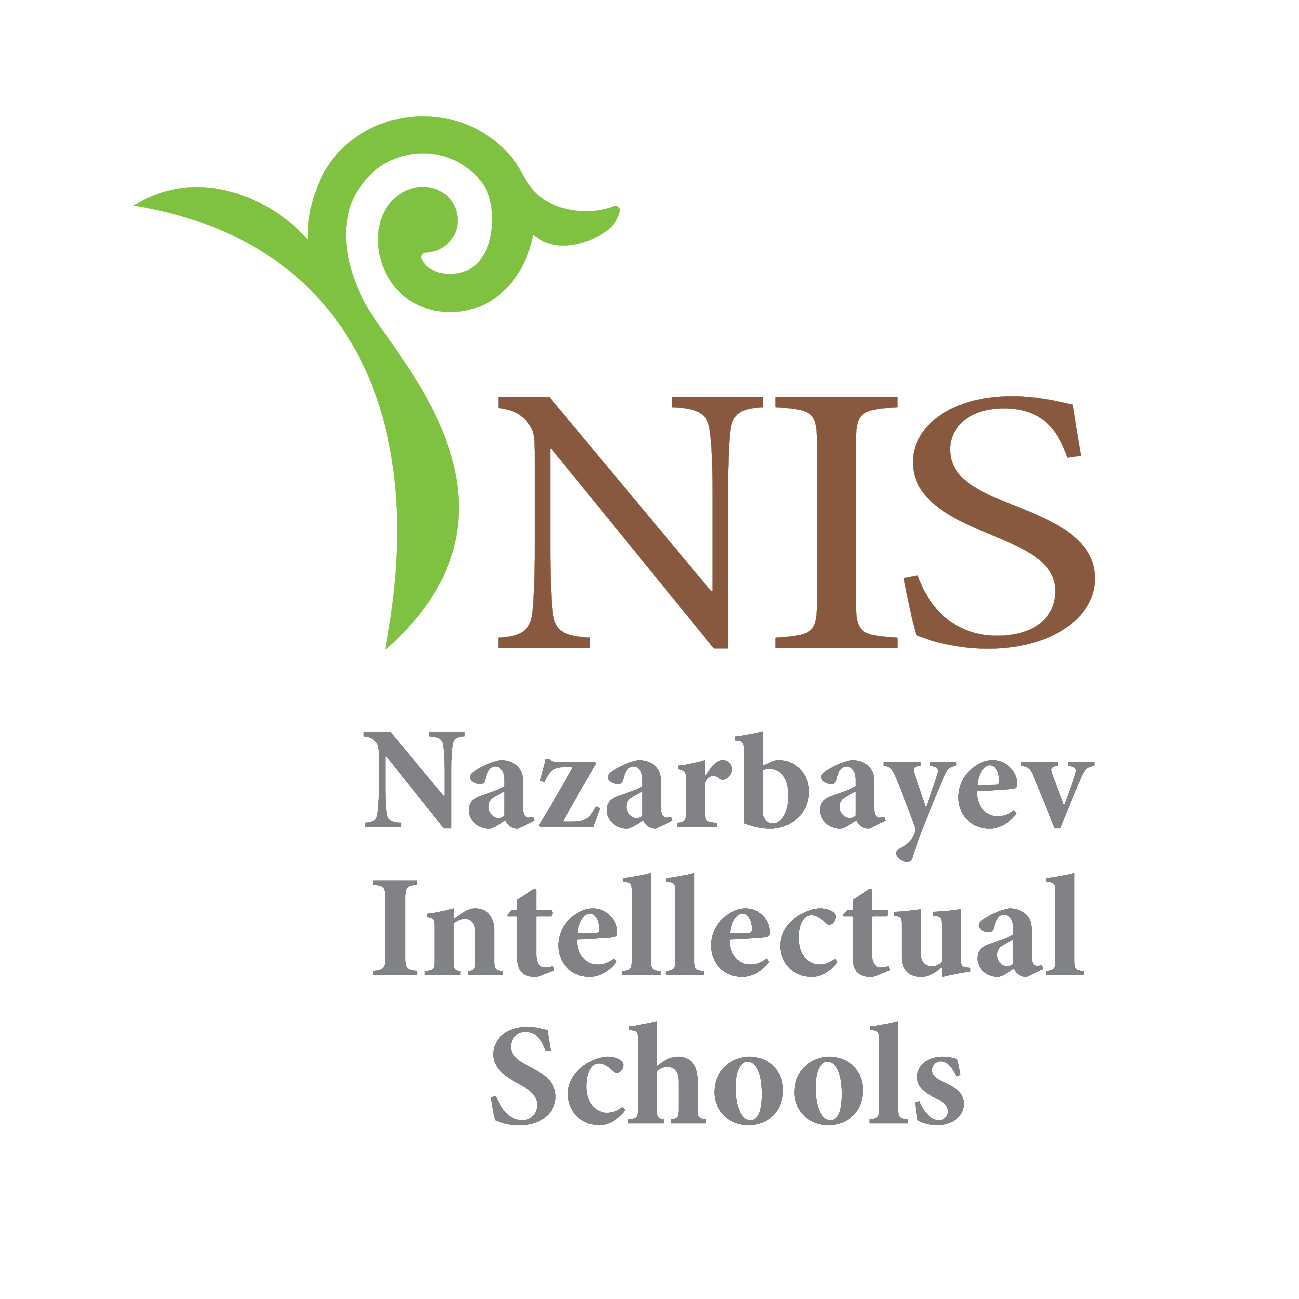 Nazarbayev Intellectual Schools